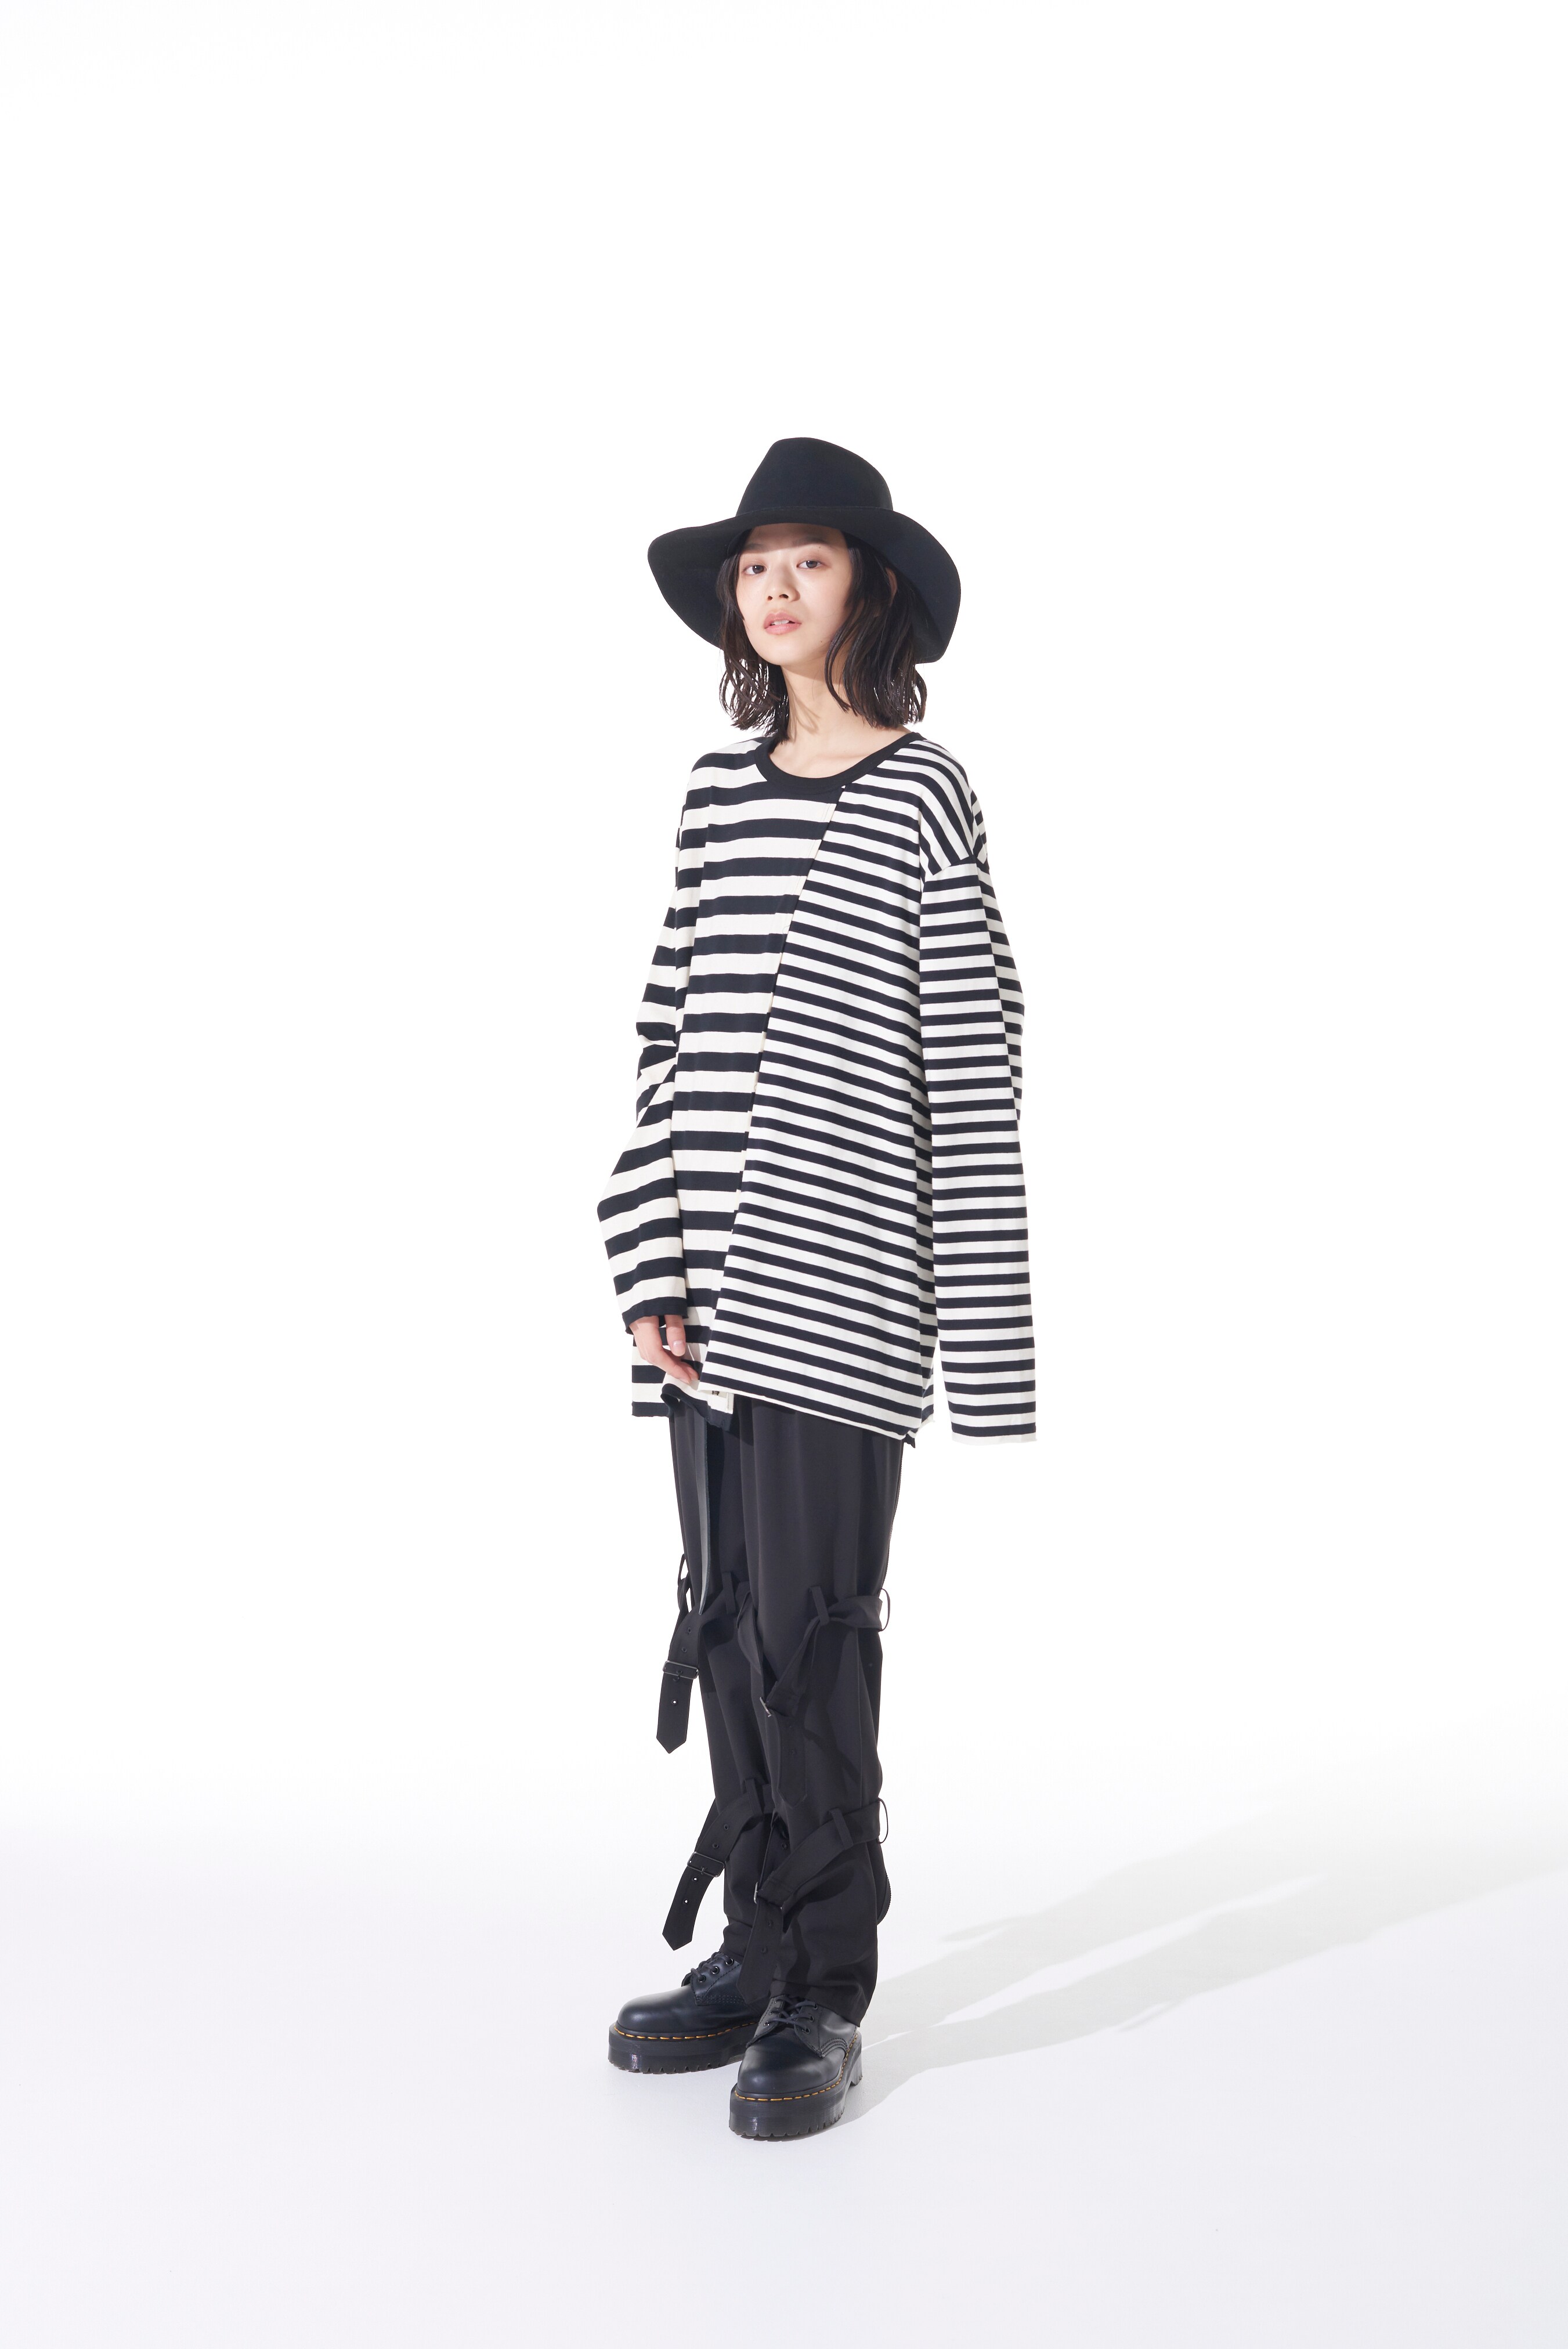 Thin Stripe + Thick Stripe Shifting Long Sleeve T-Shirt